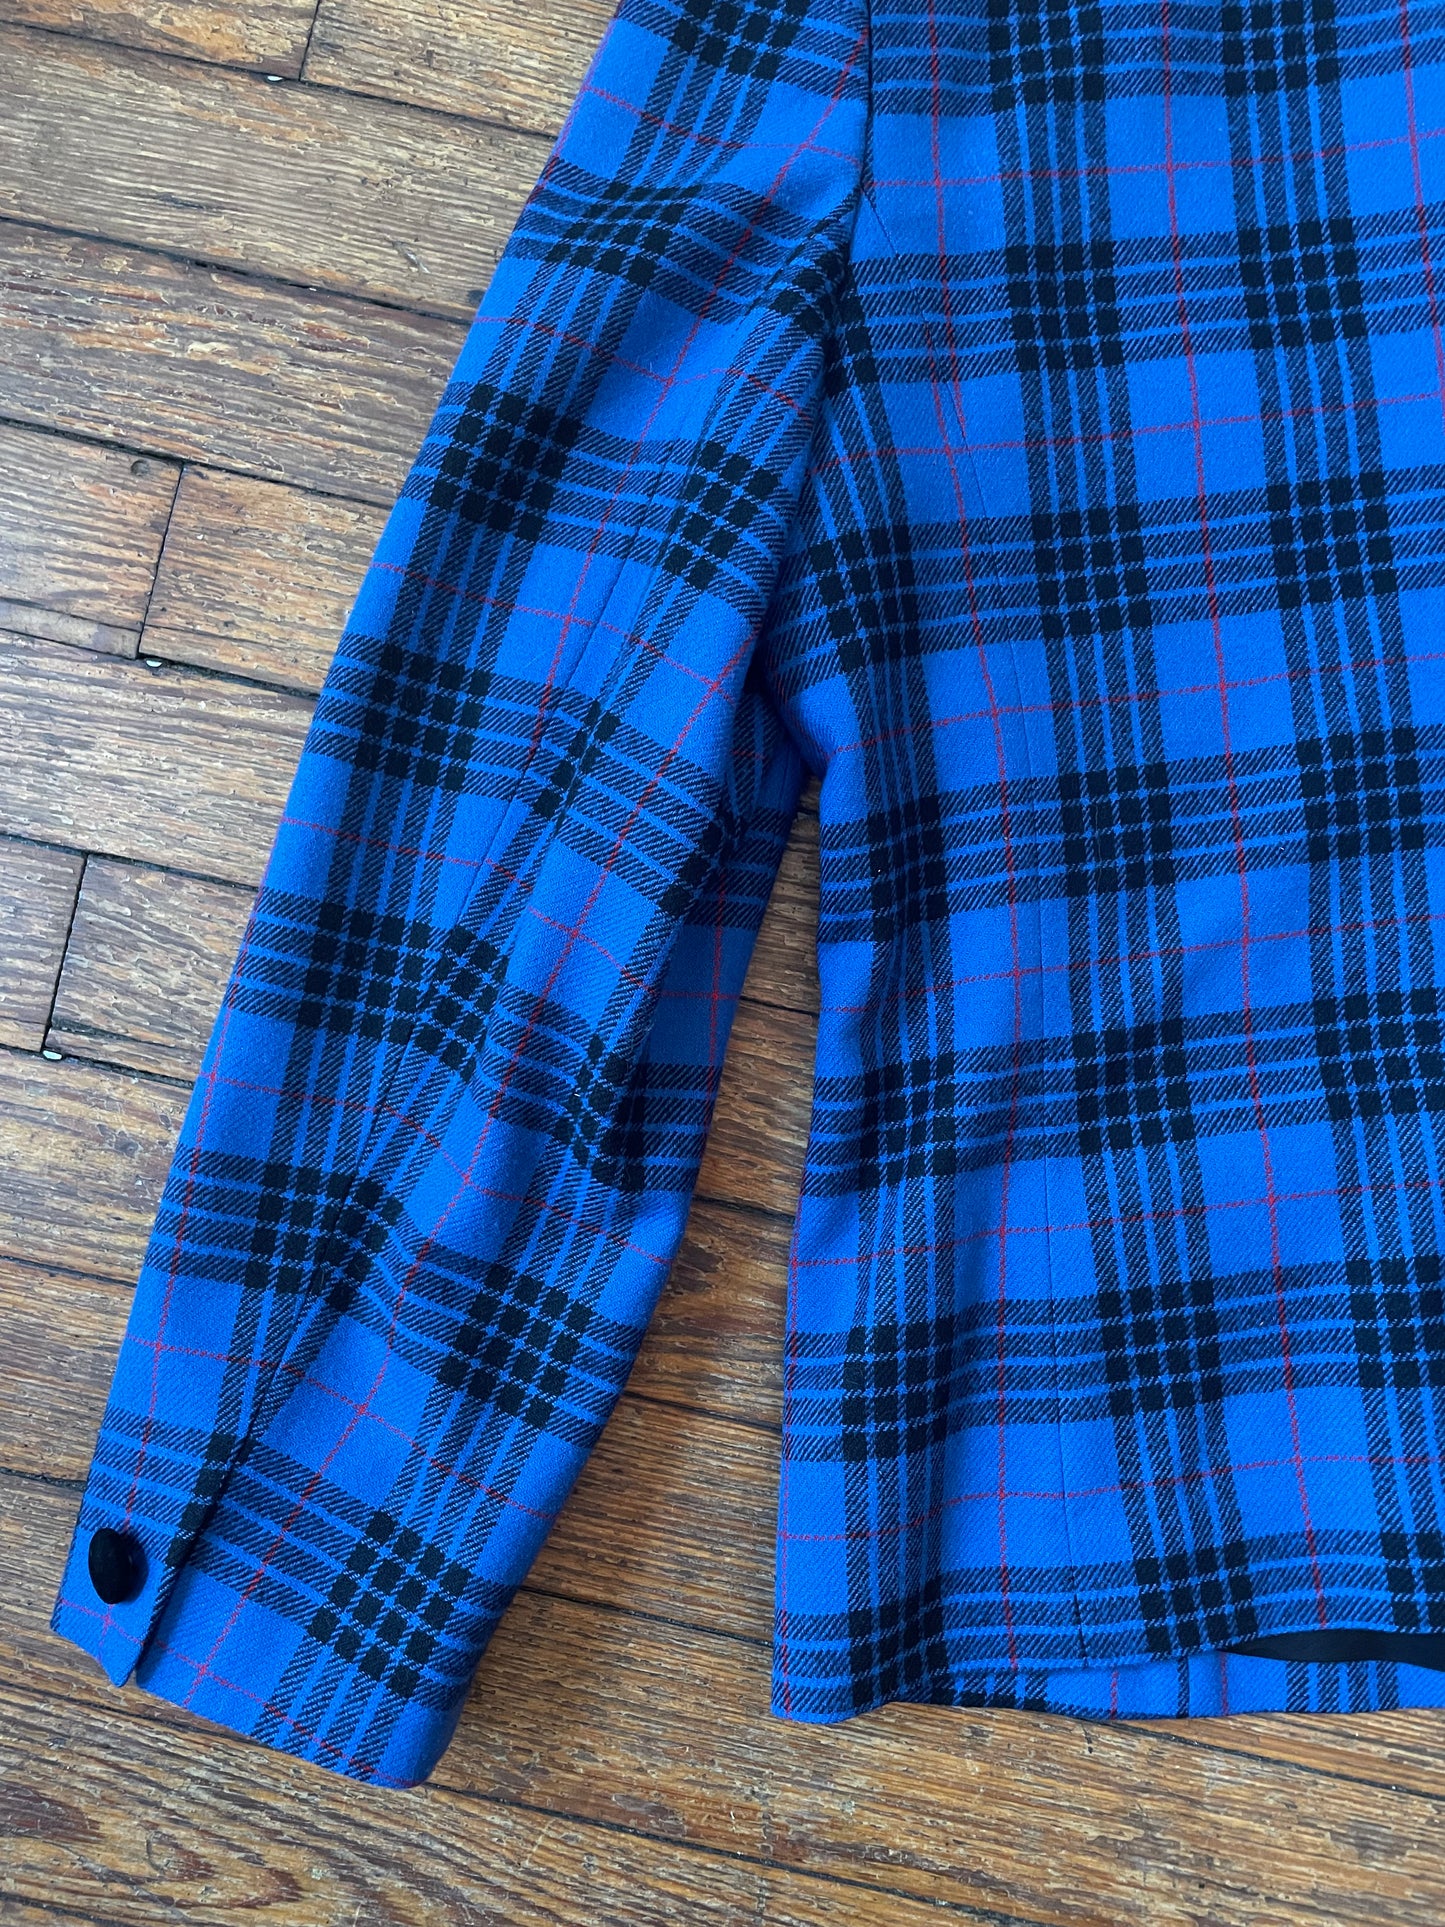 Vintage Pendleton Wool Blue and Black Morgan Tartan Skirt And Jacket